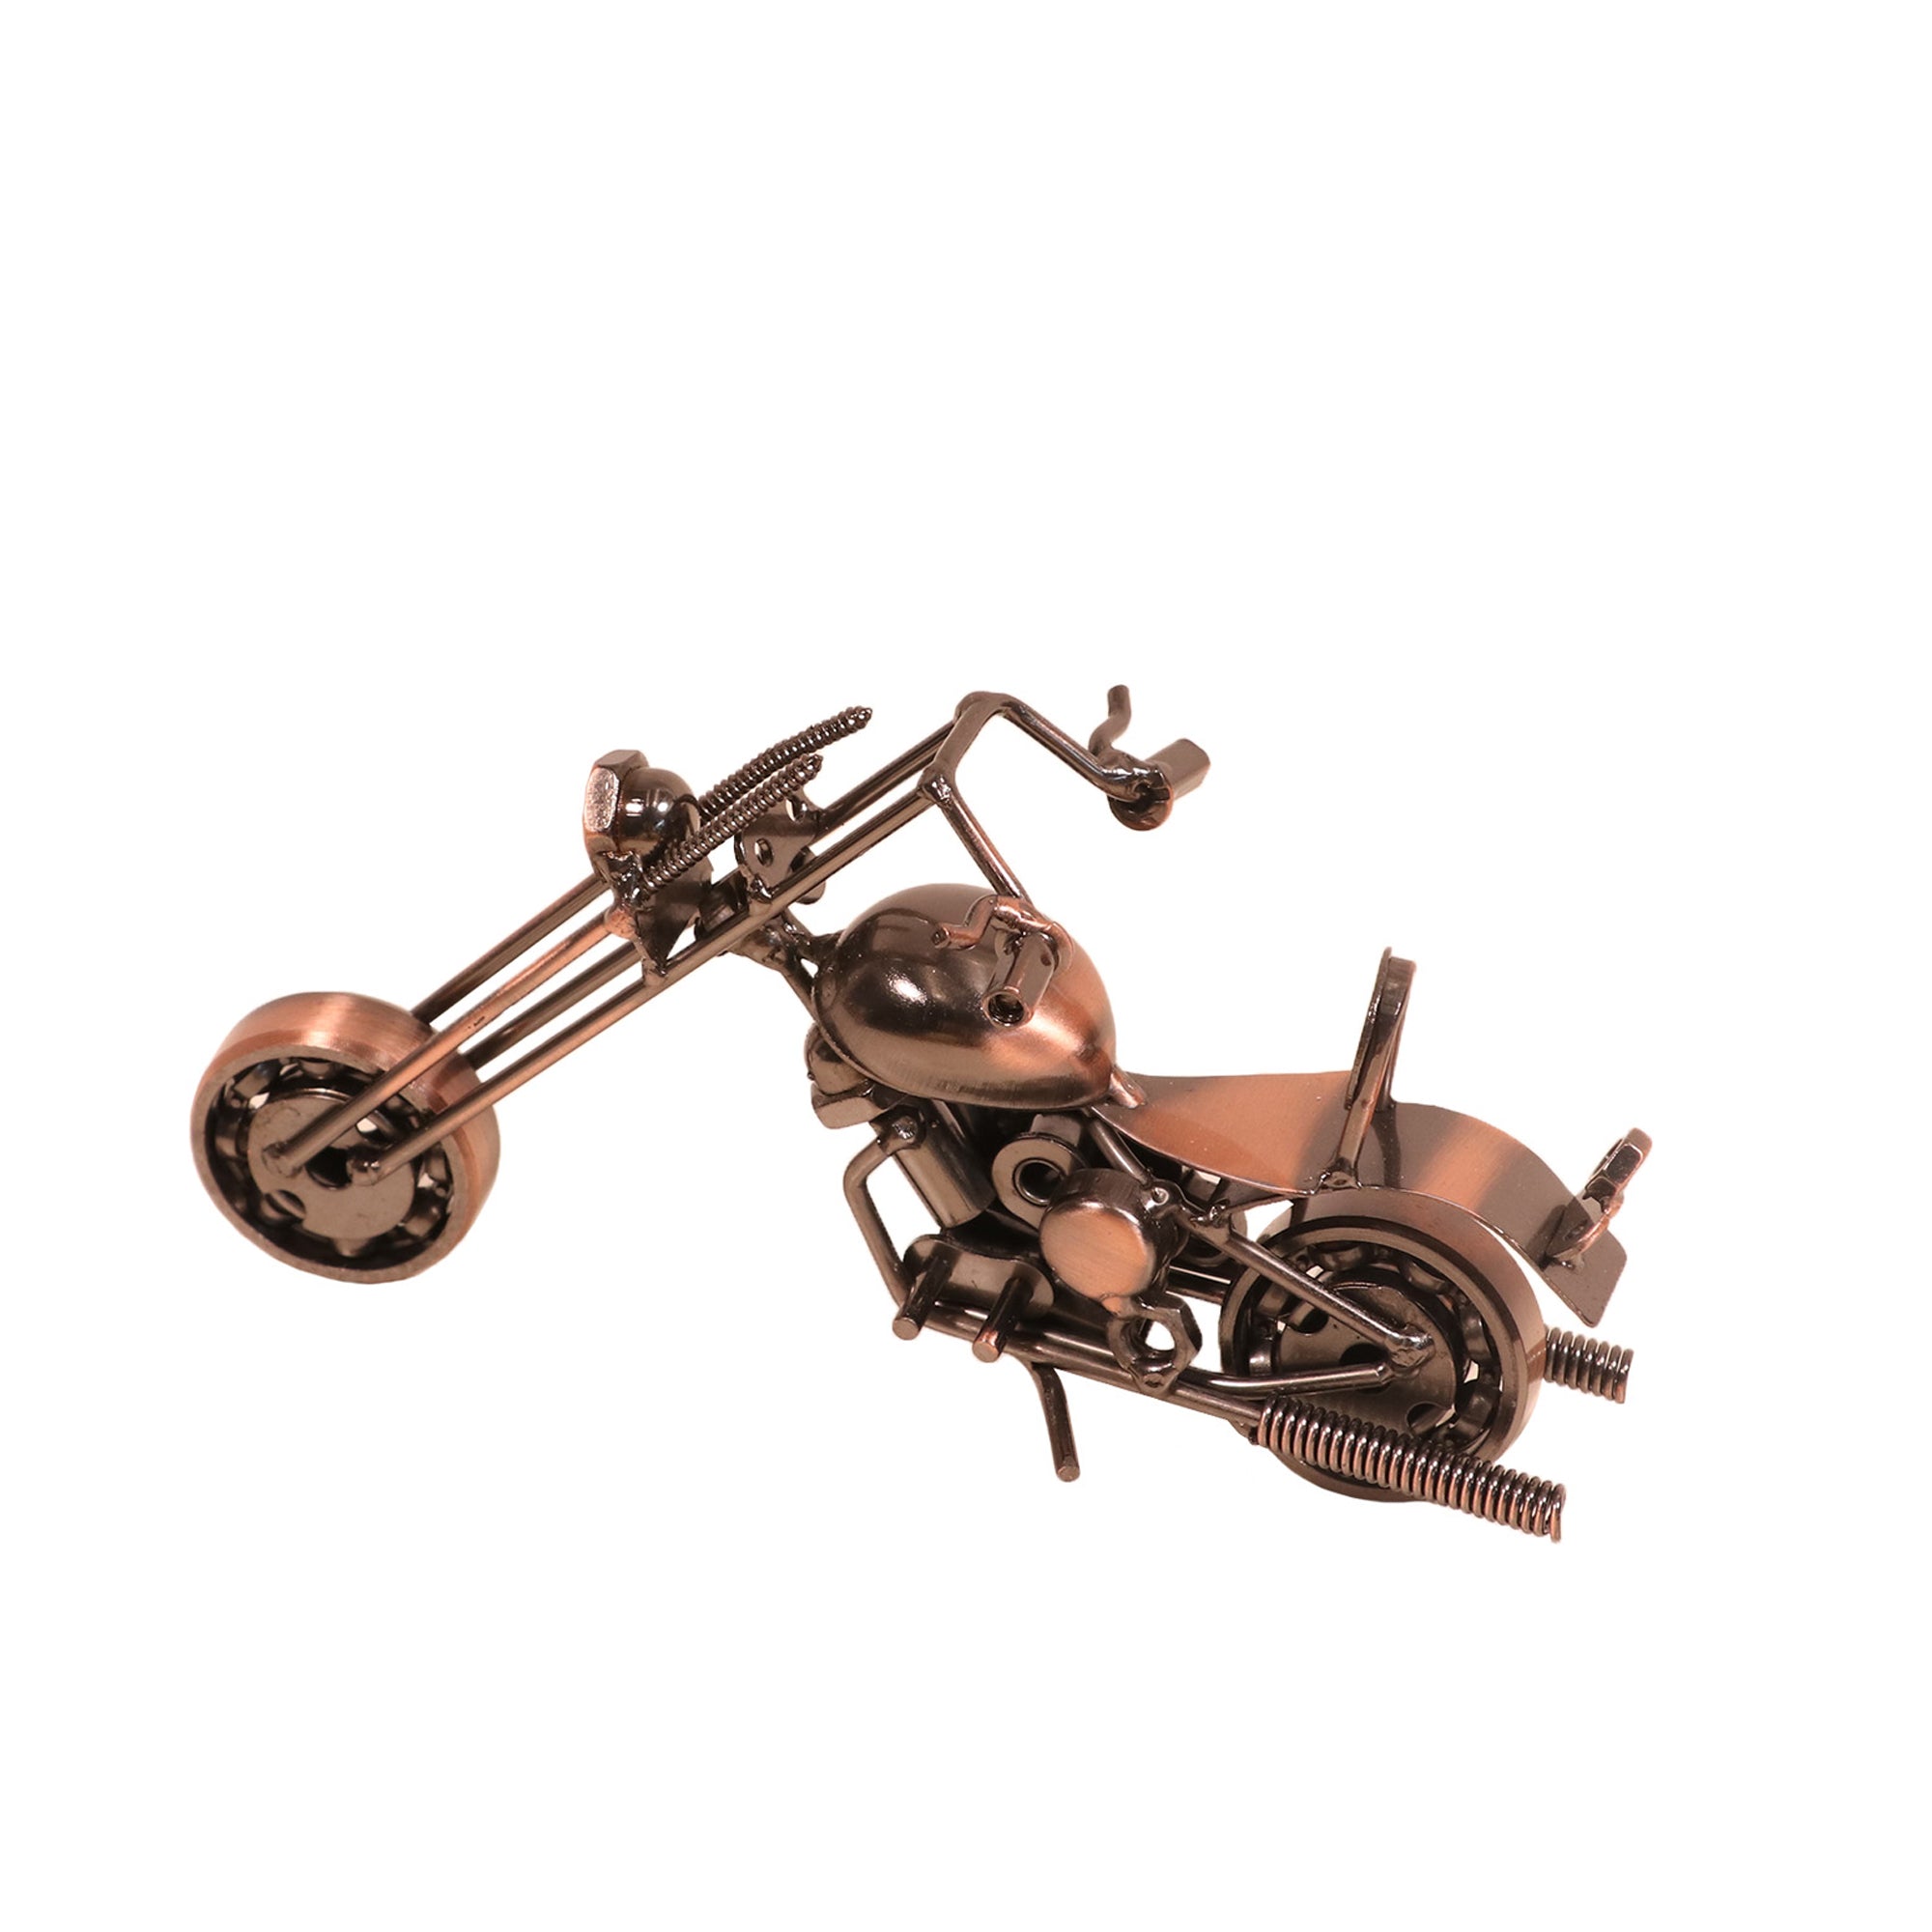 Metallic Showpiece bike Miniature Vehicle figurine